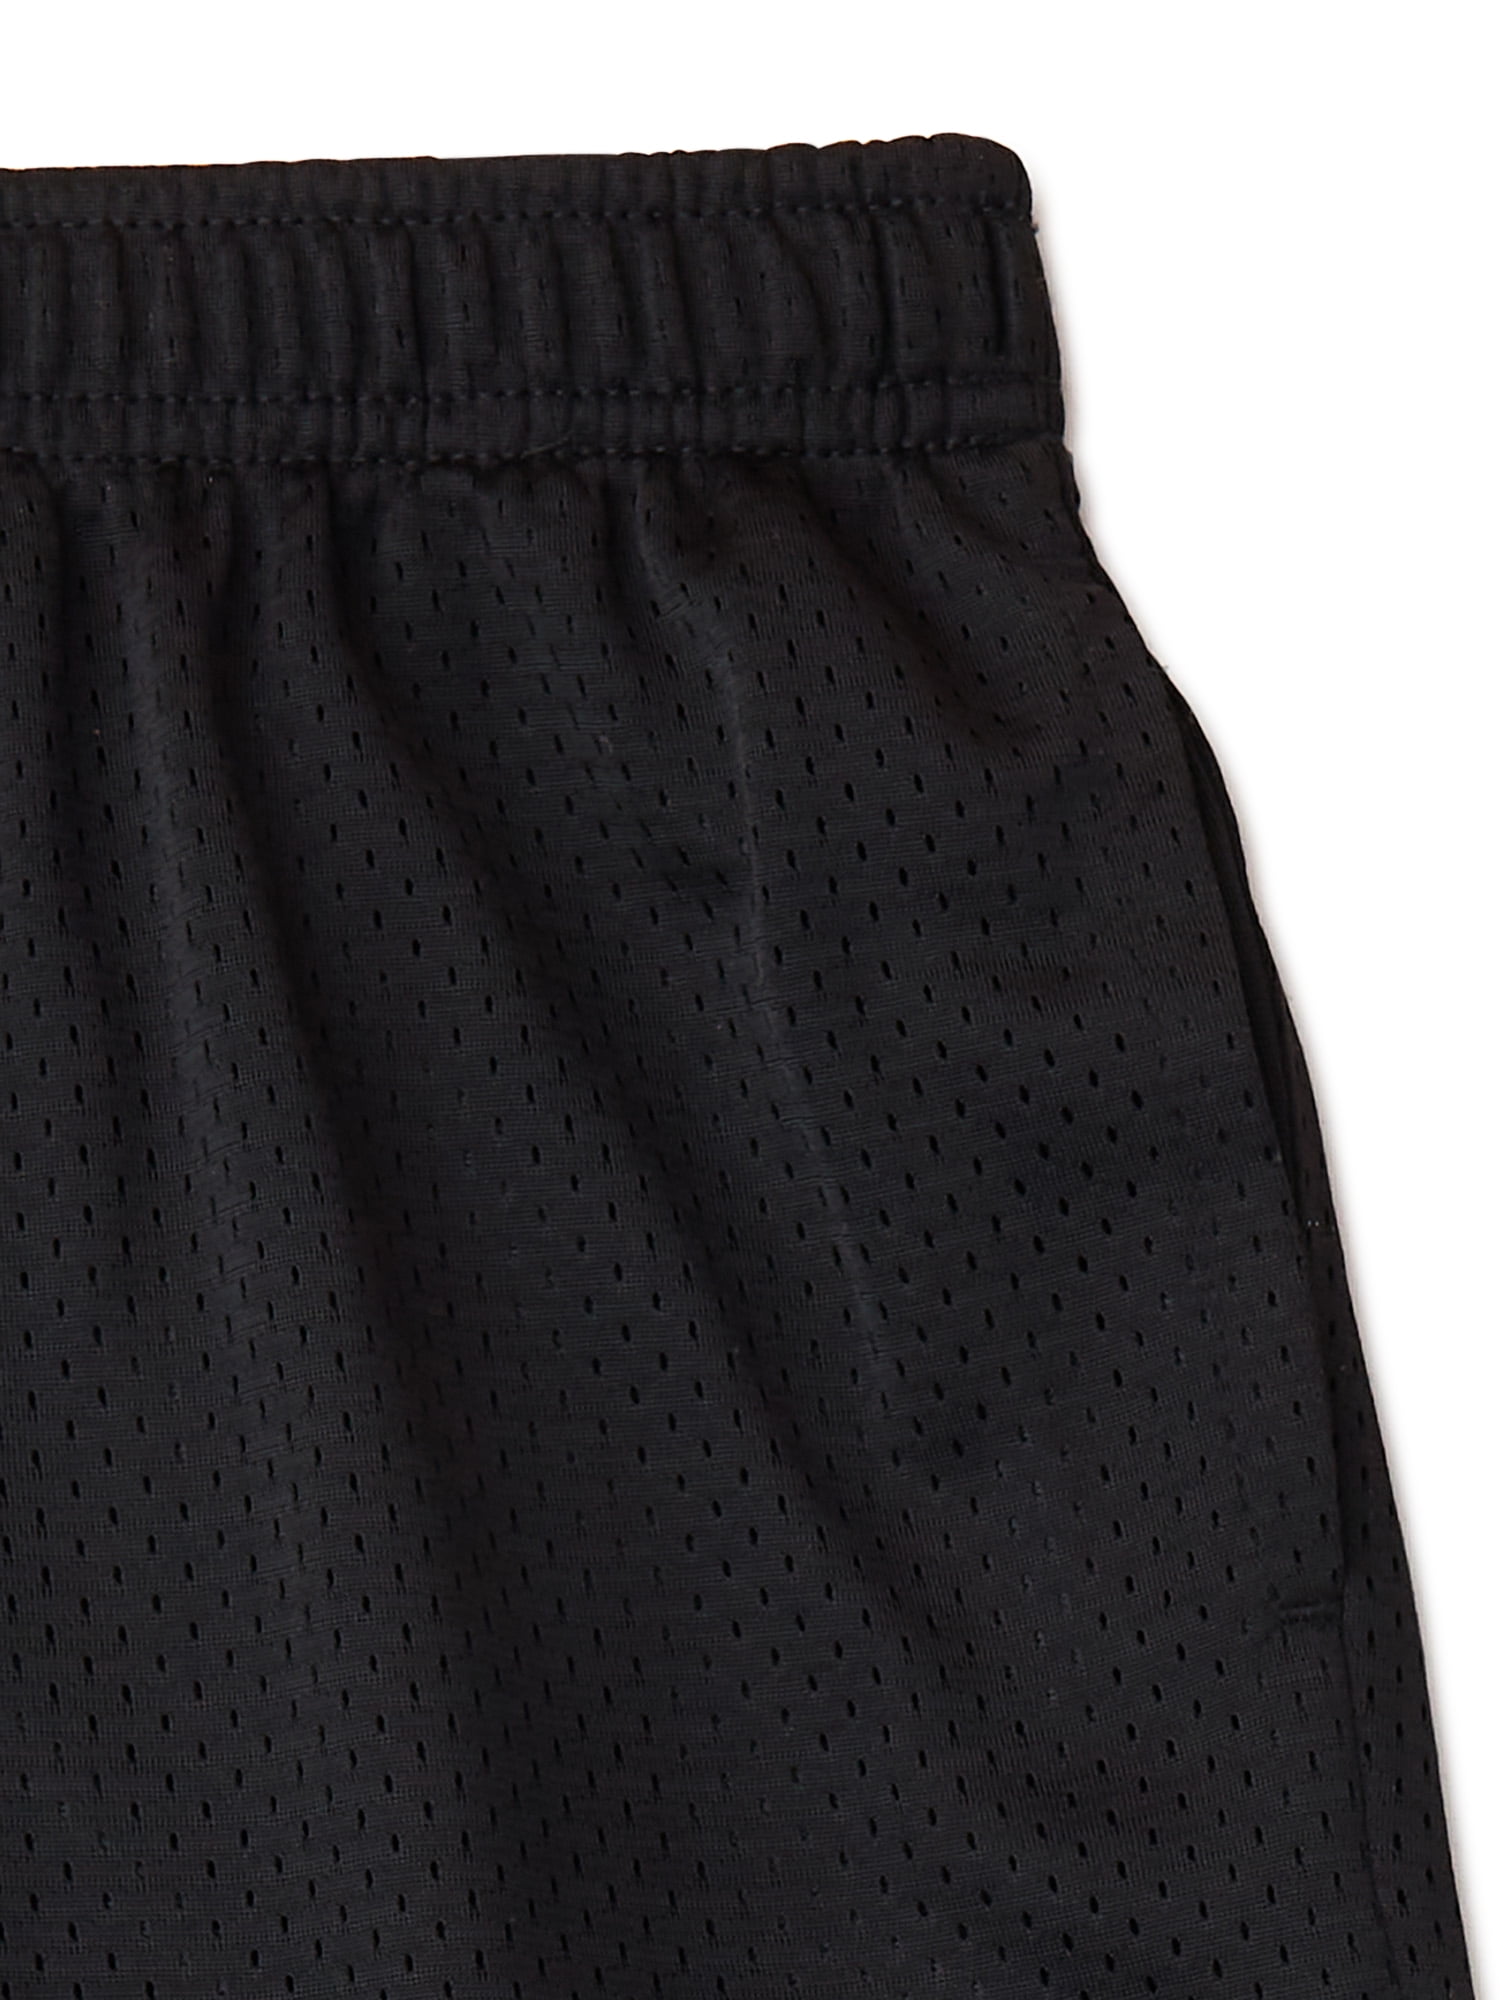 Athletic Works Boys Mesh Shorts, 3-Pack, Sizes 4-18 & Husky 